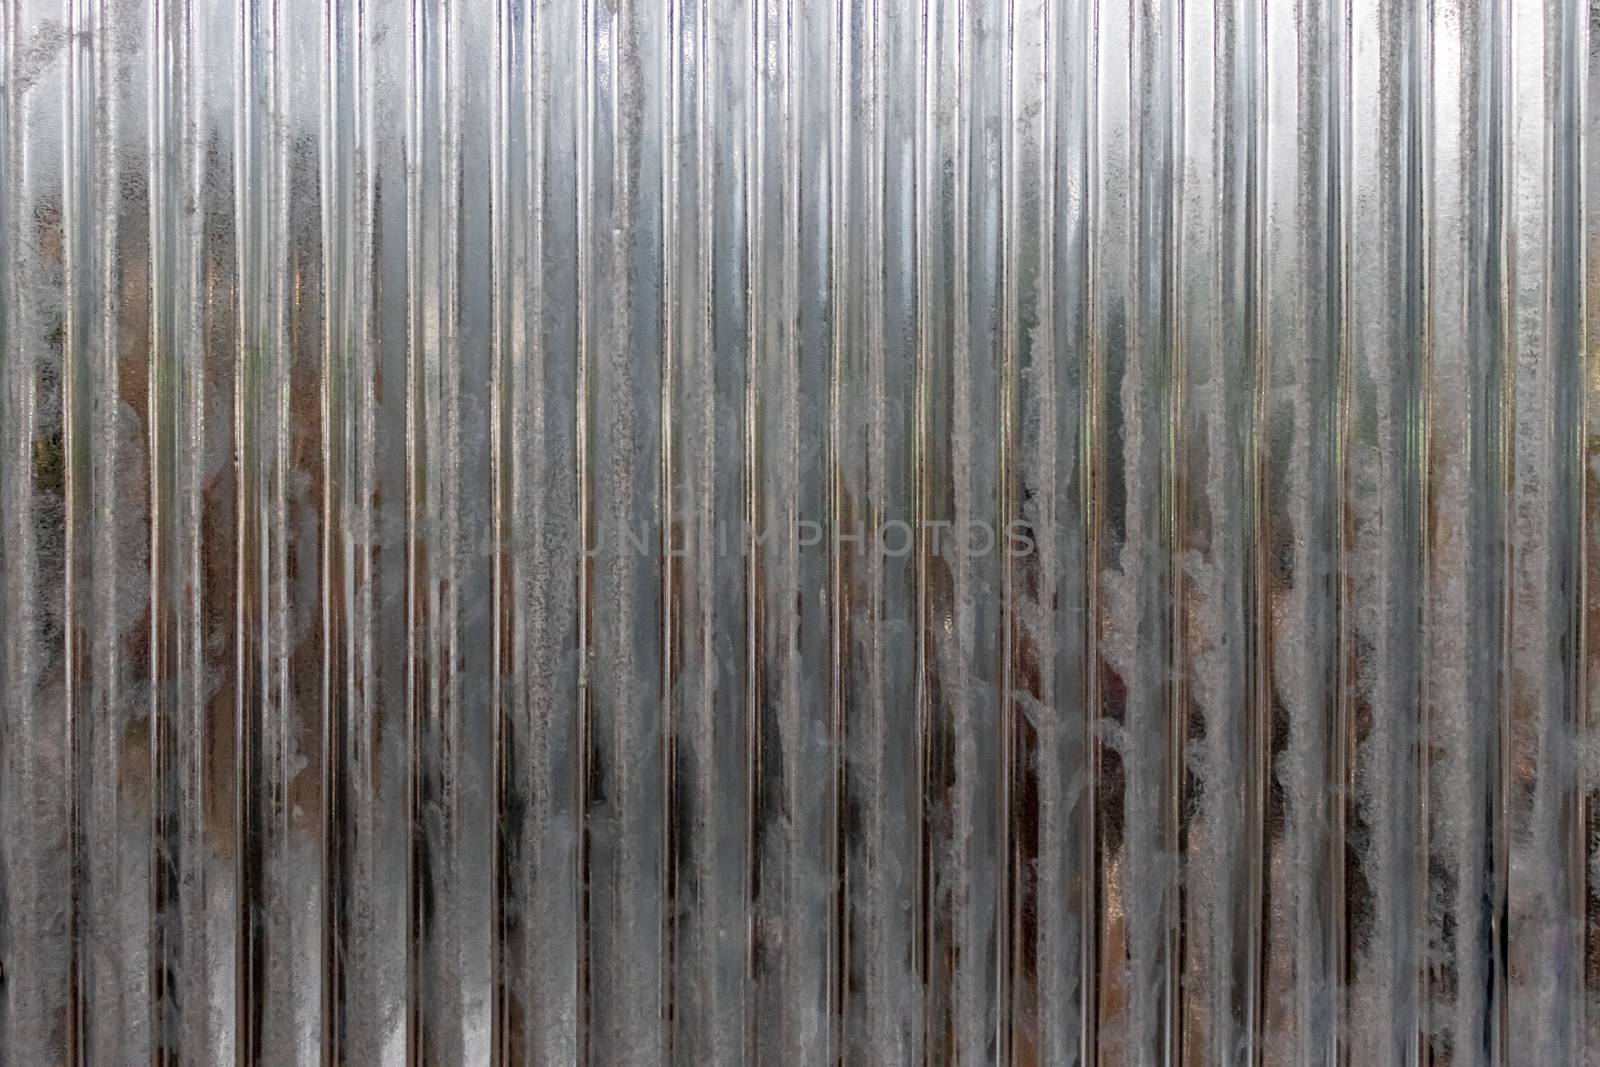 Wavy pattern of   galvanized metal sheet background.